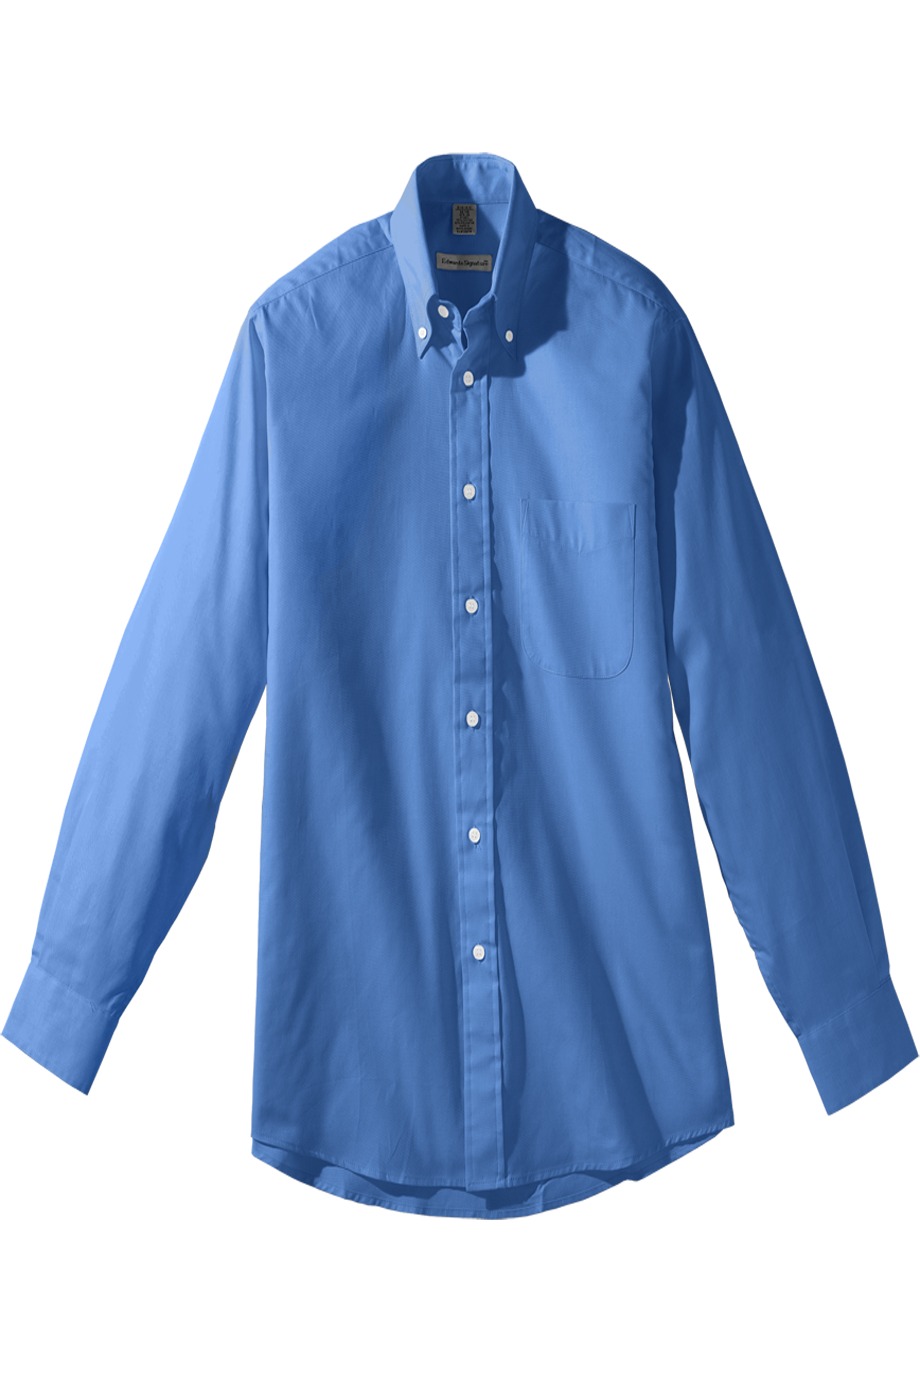 Edwards Garment 1975 - Men's Long Sleeve Pinpoint Oxford Shirt